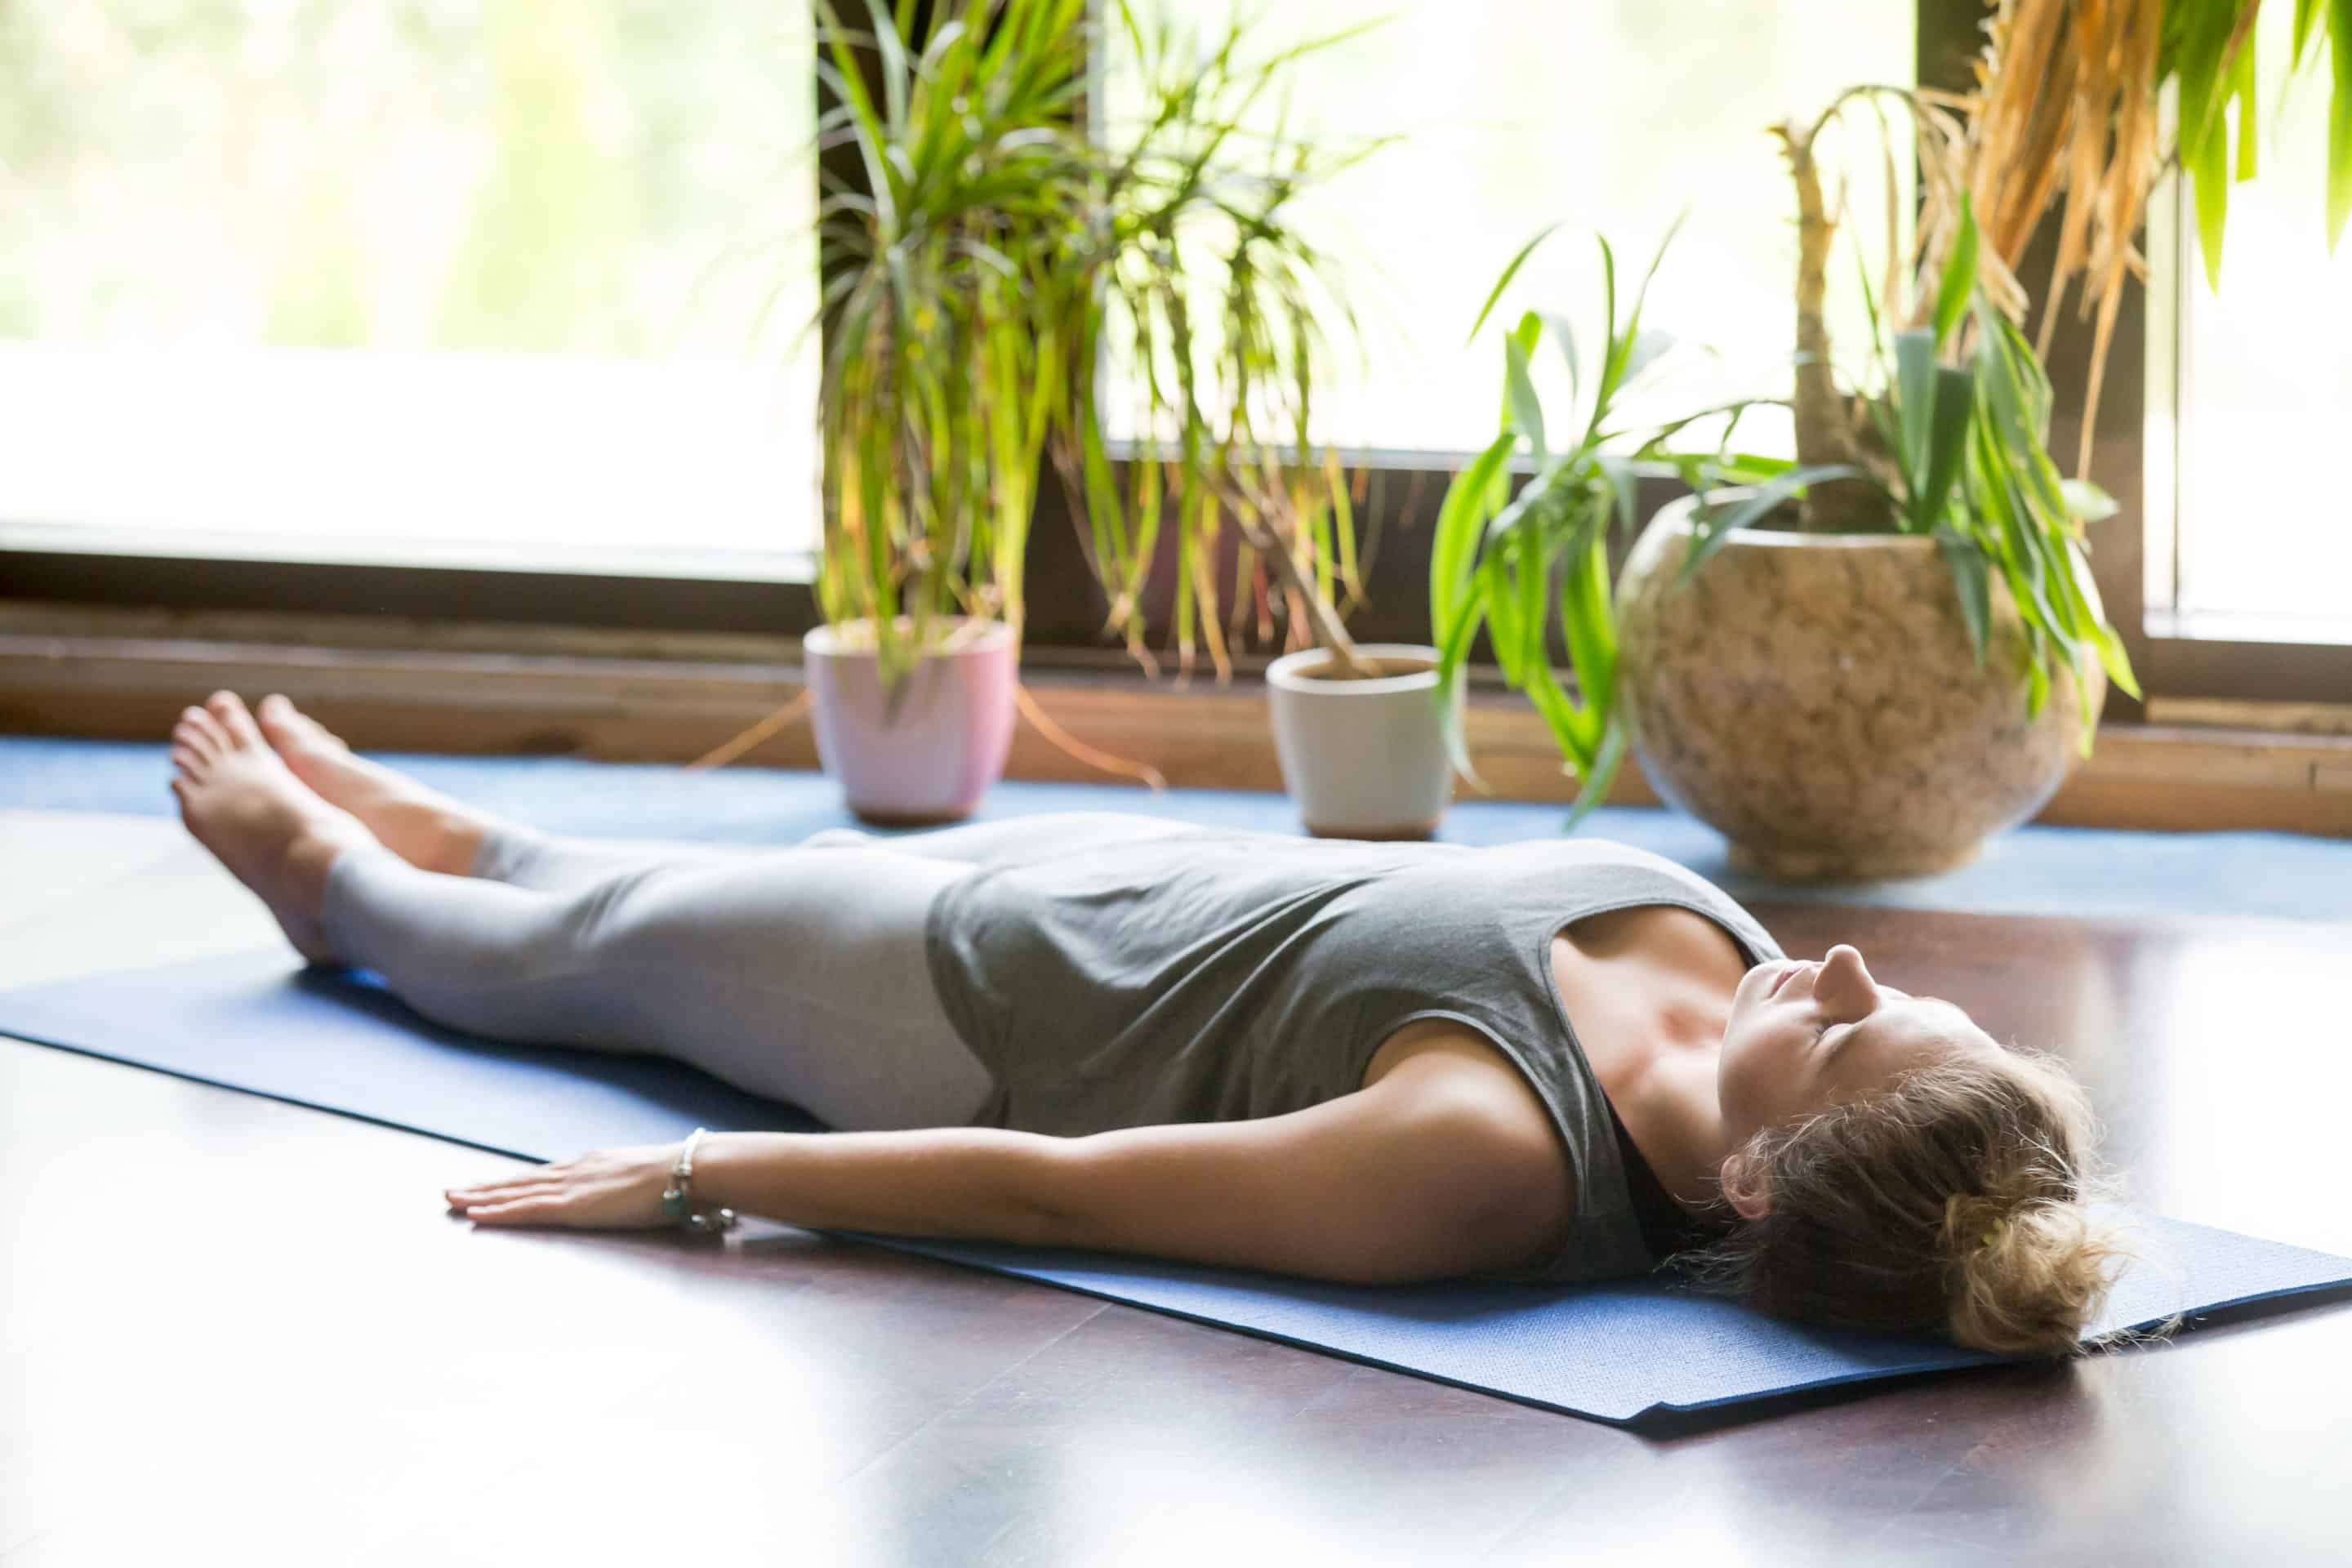 A woman practicing yoga nidra on a yoga mat